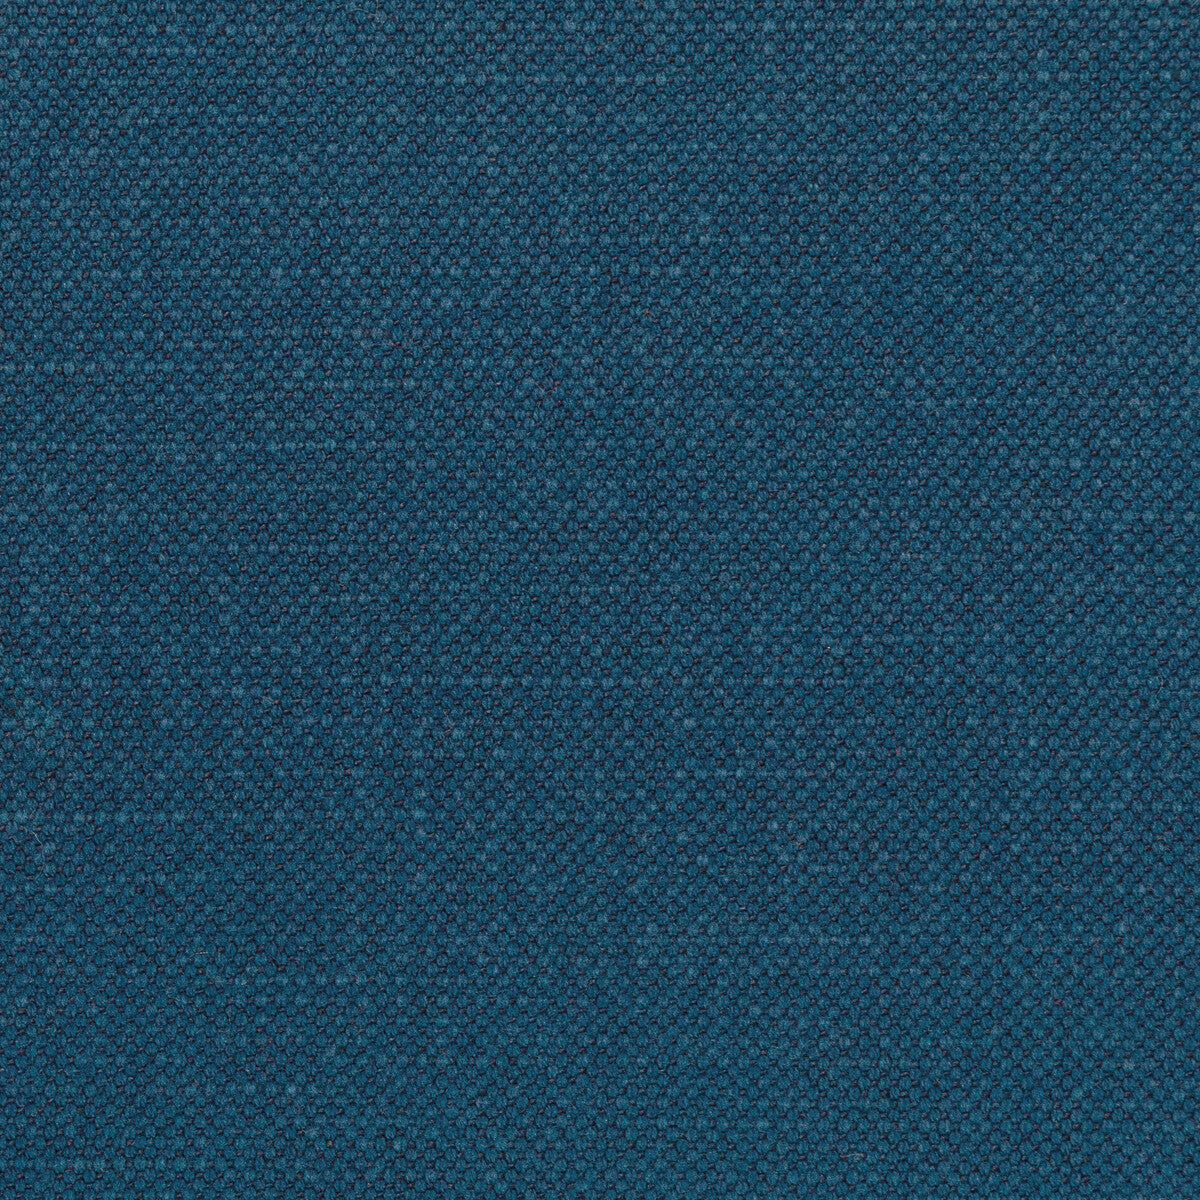 Carson fabric in indigo color - pattern 36282.50.0 - by Kravet Basics